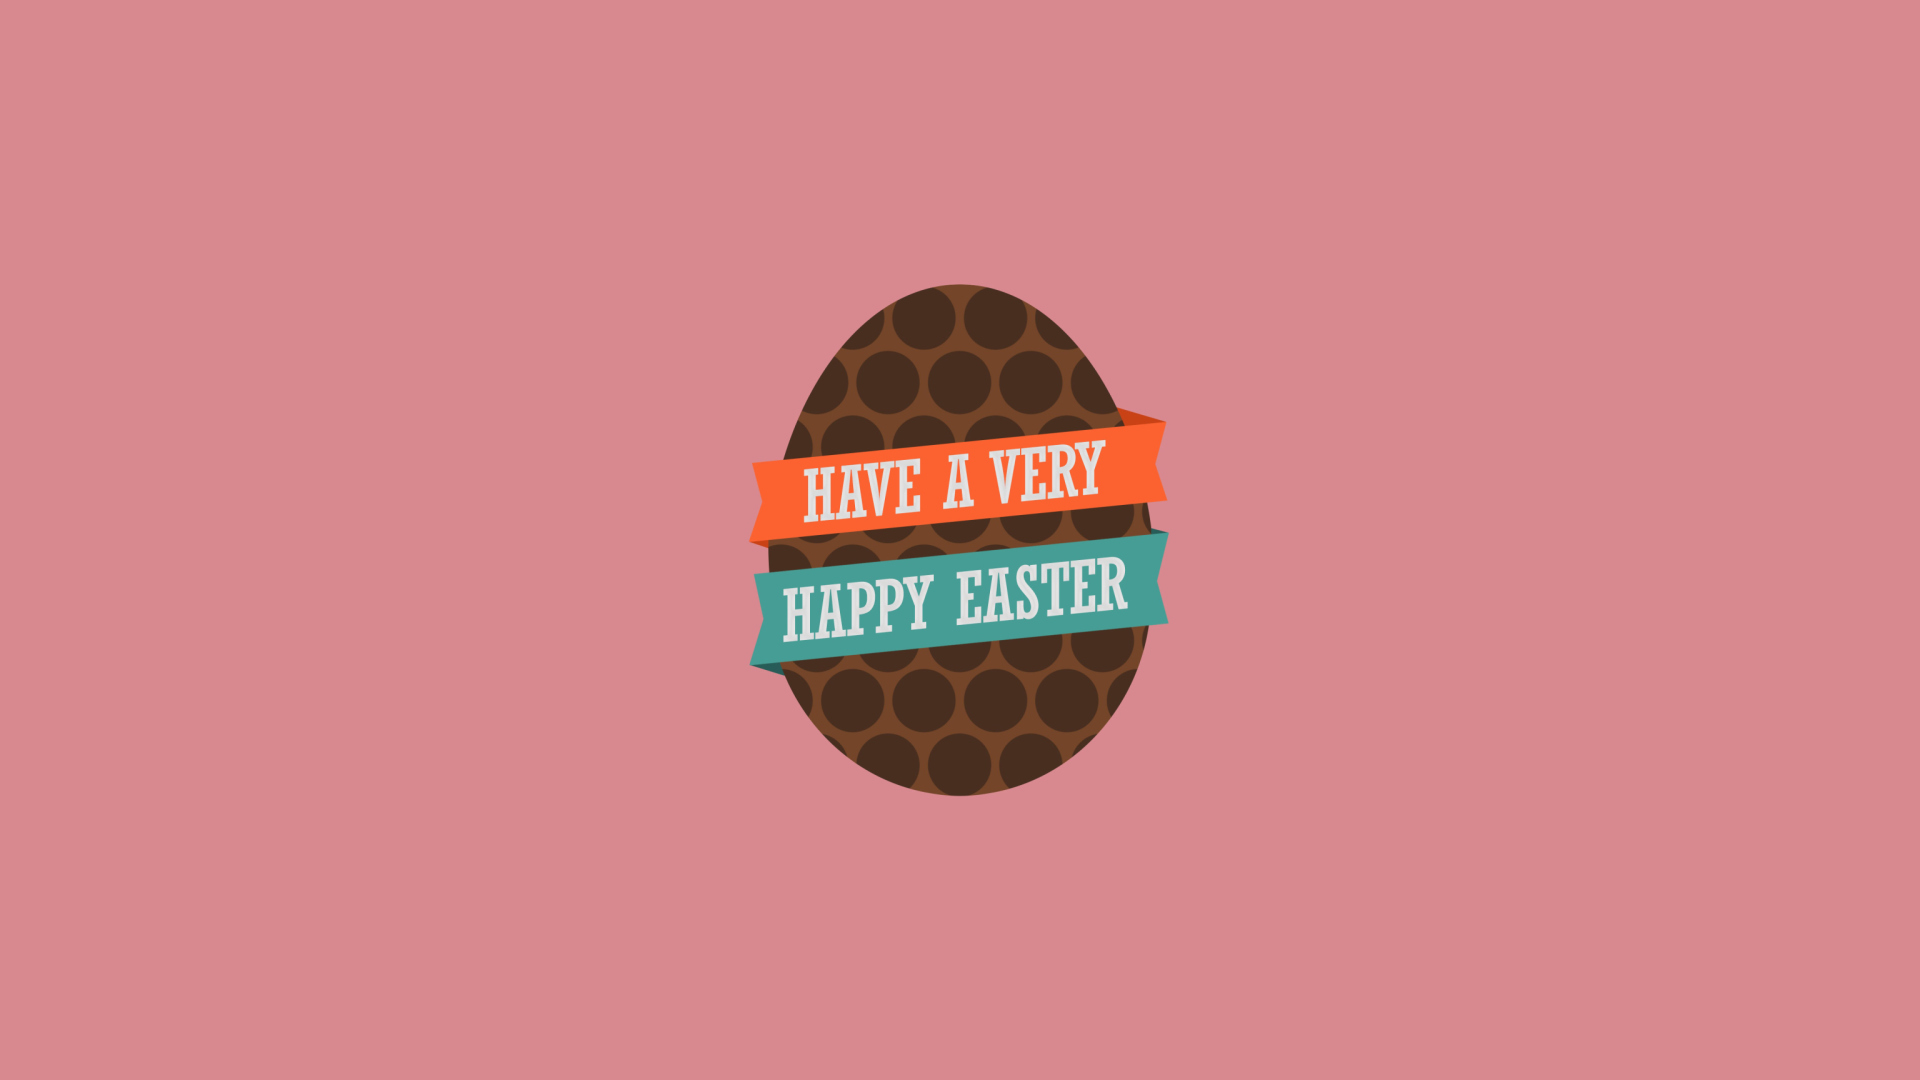 Обои Very Happy Easter Egg 1920x1080